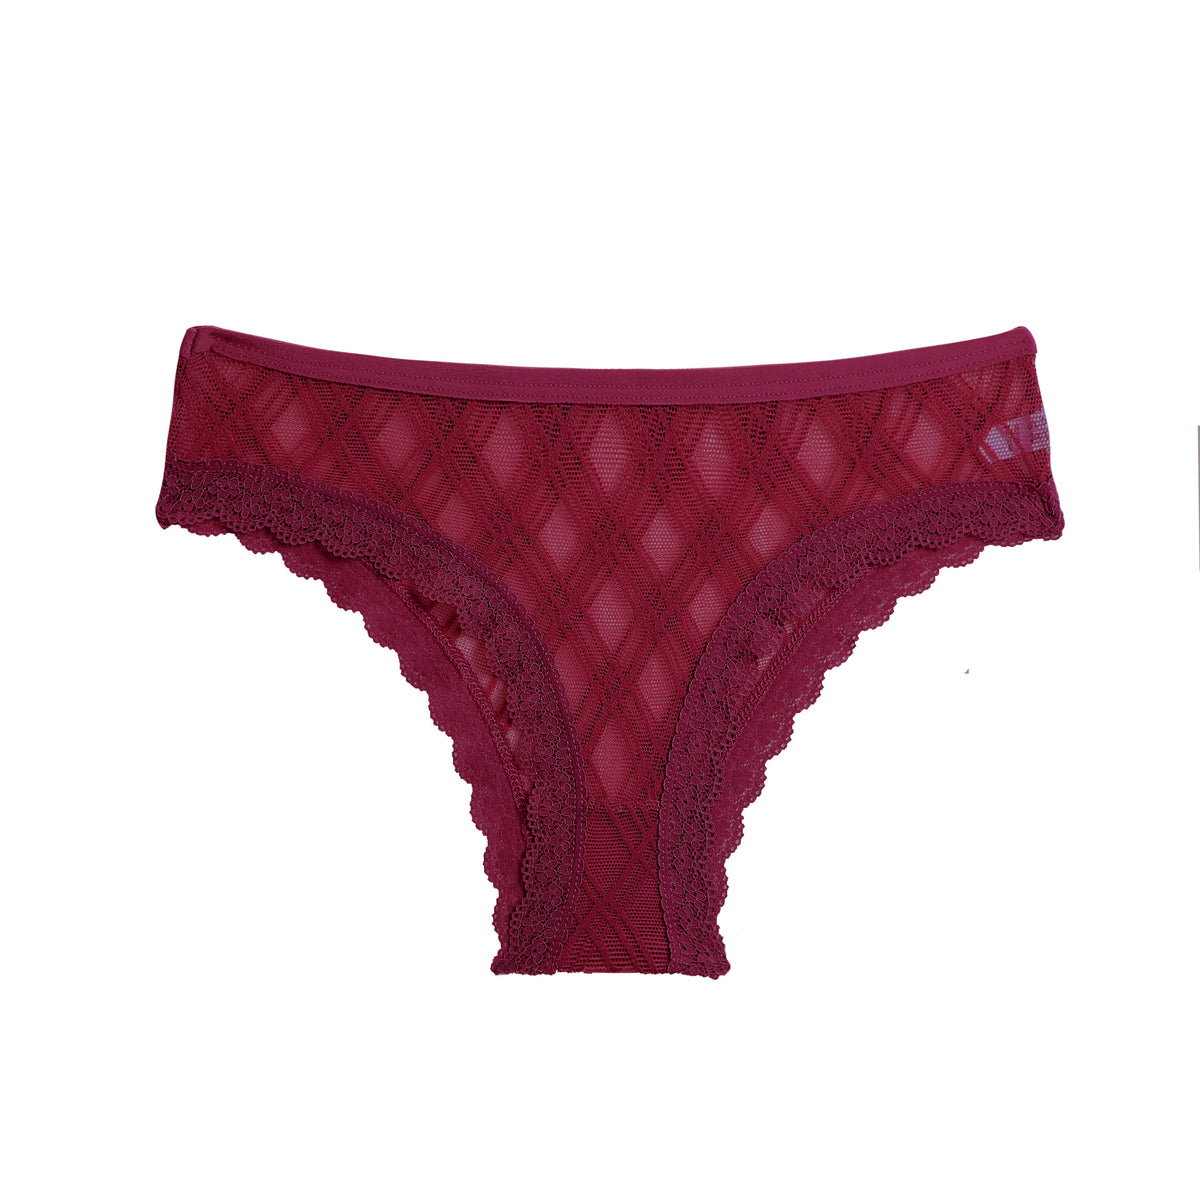 Pomegranate Elegance Cotton Lace Underwear | Hypoallergenic - Allergy Friendly - Naturally Free